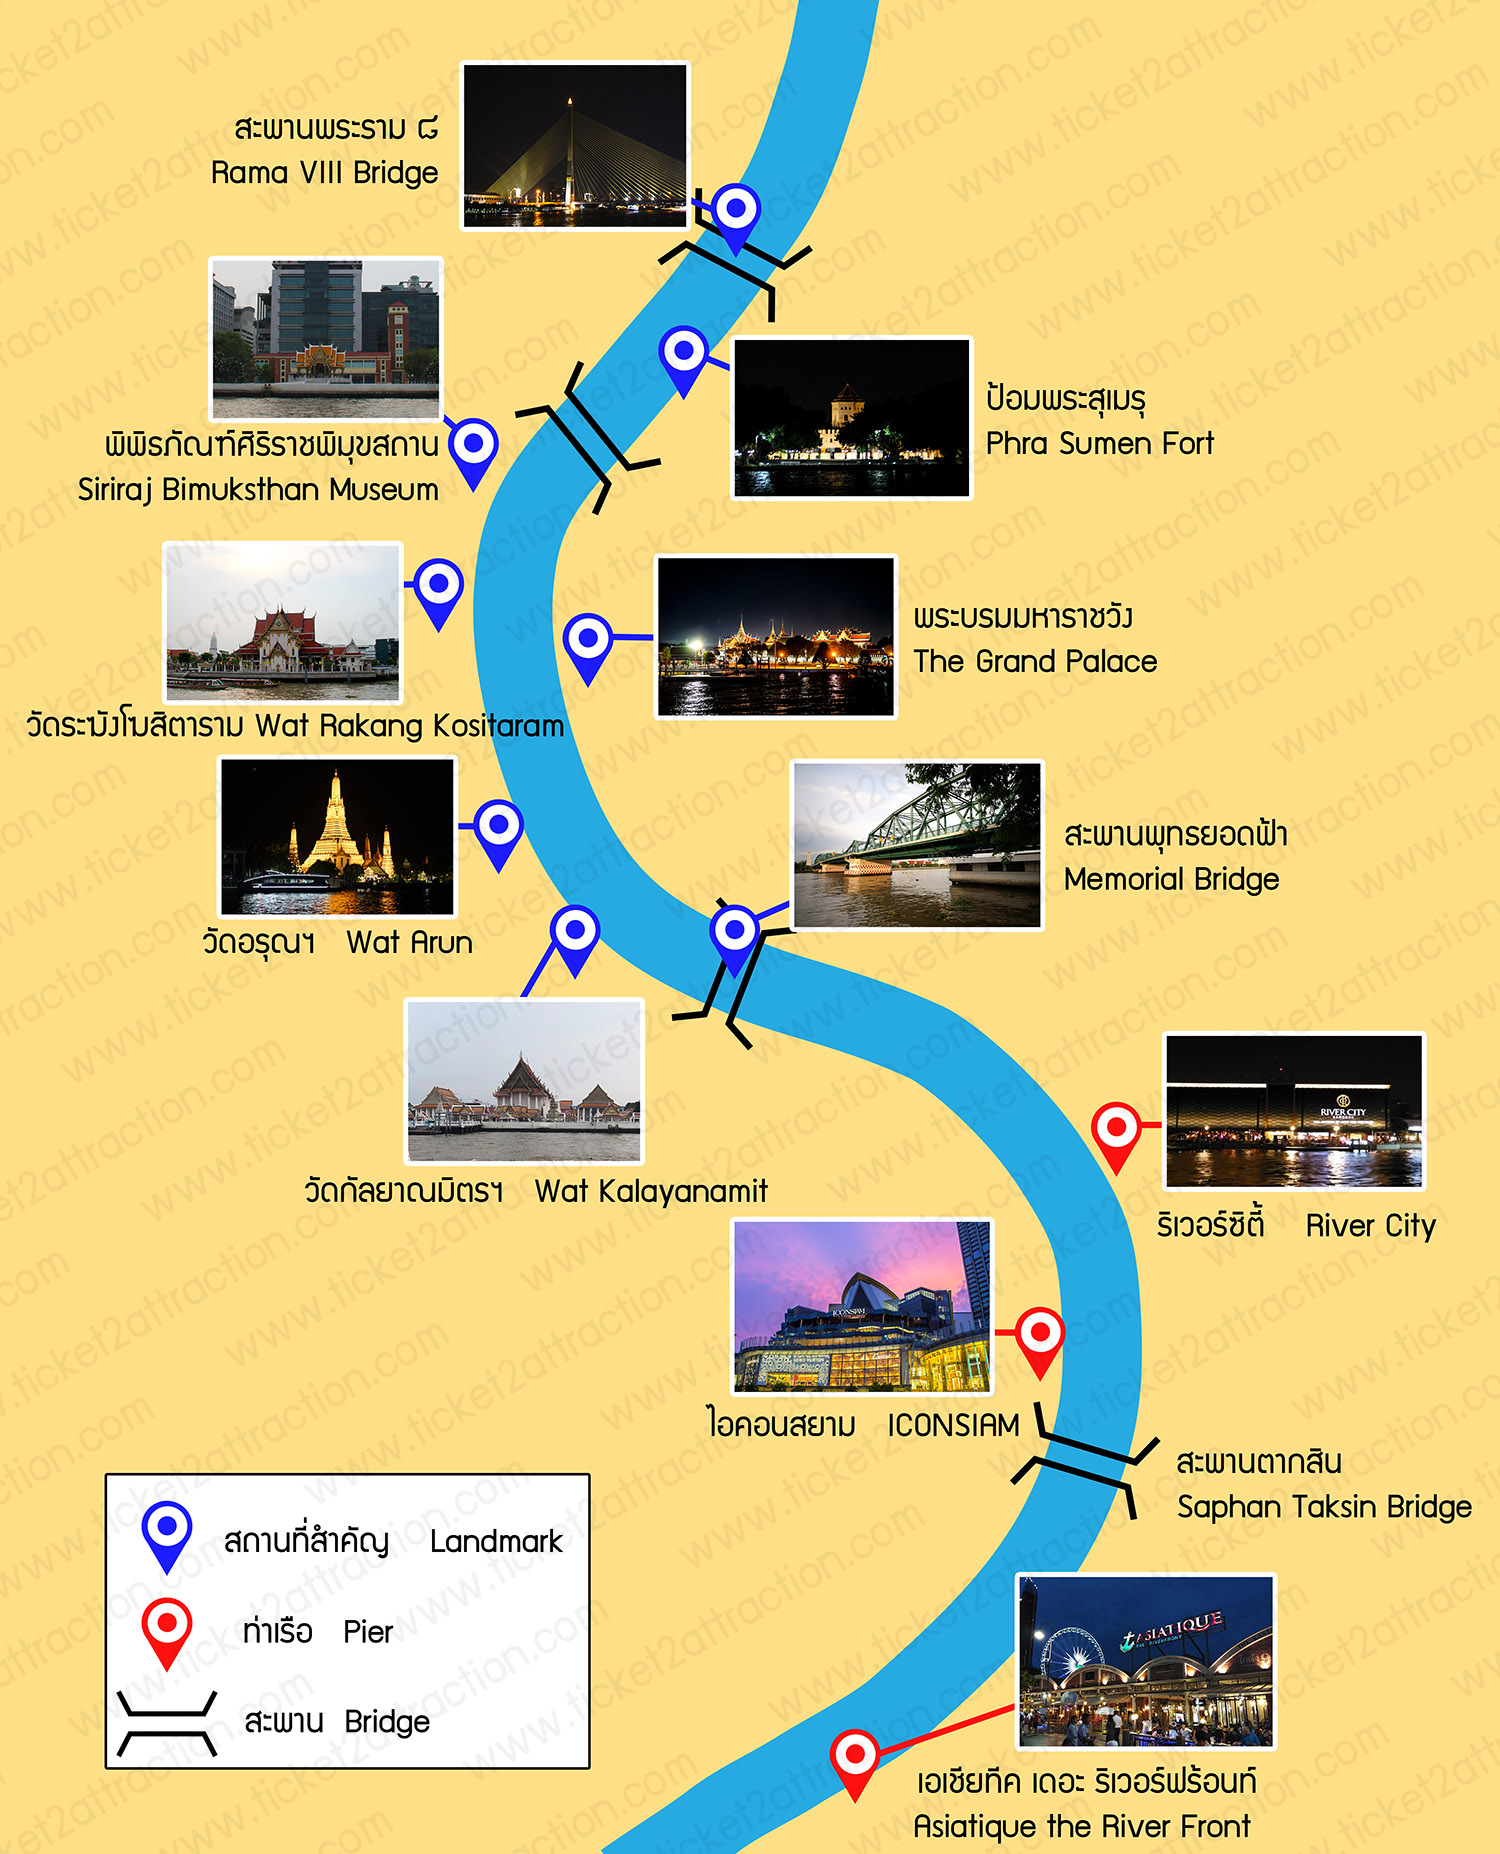 chao phraya river cruise schedule